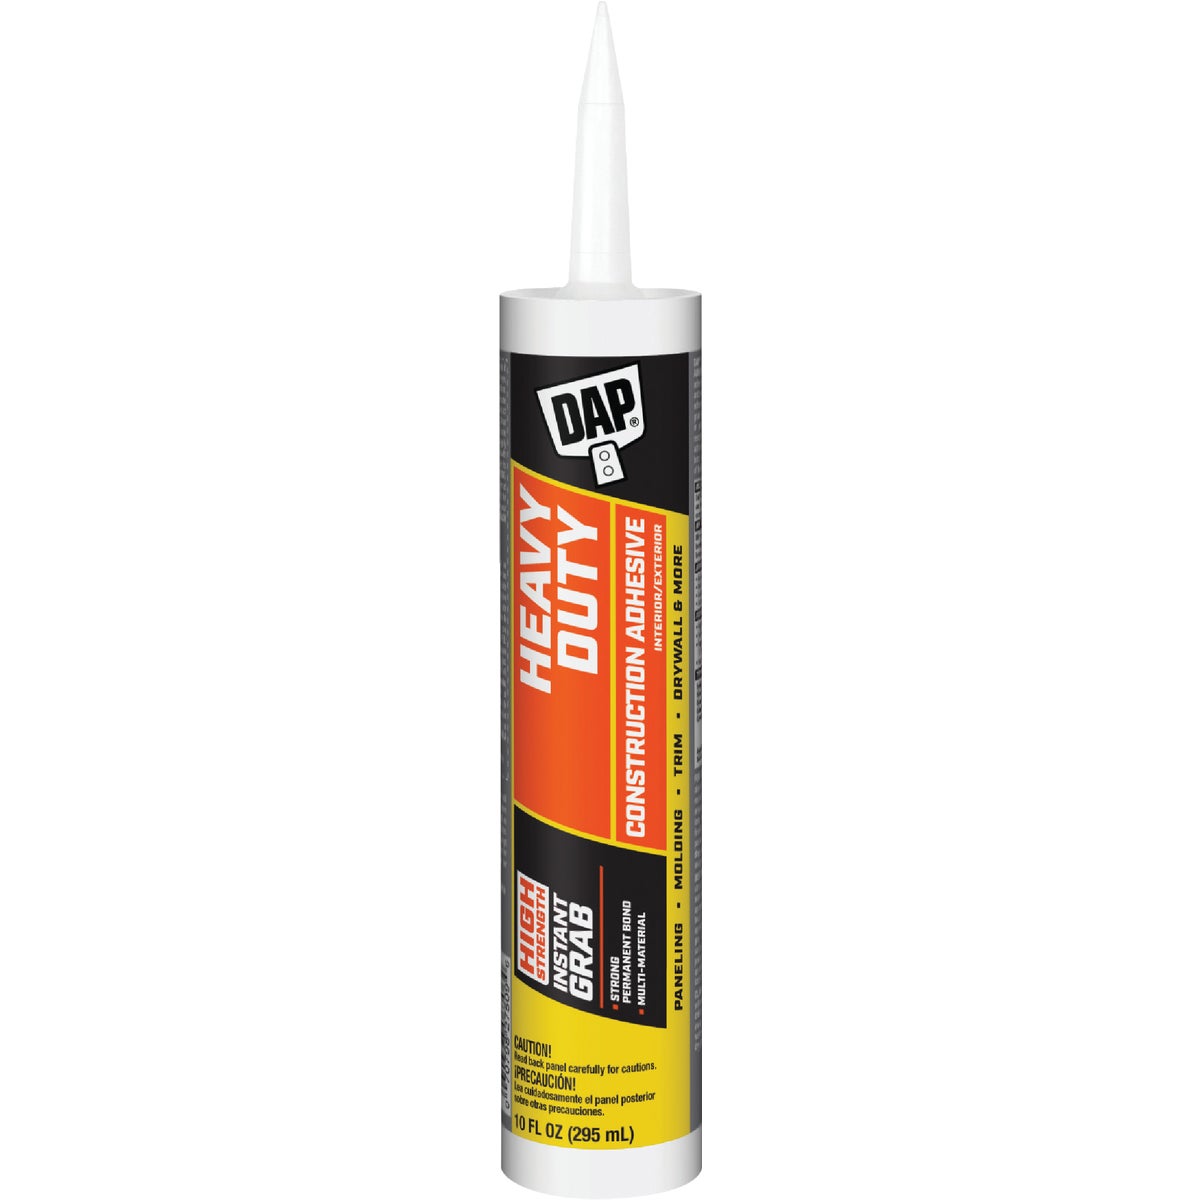 Item 771817, DAP Heavy Duty construction adhesive is a premium high strength adhesive 